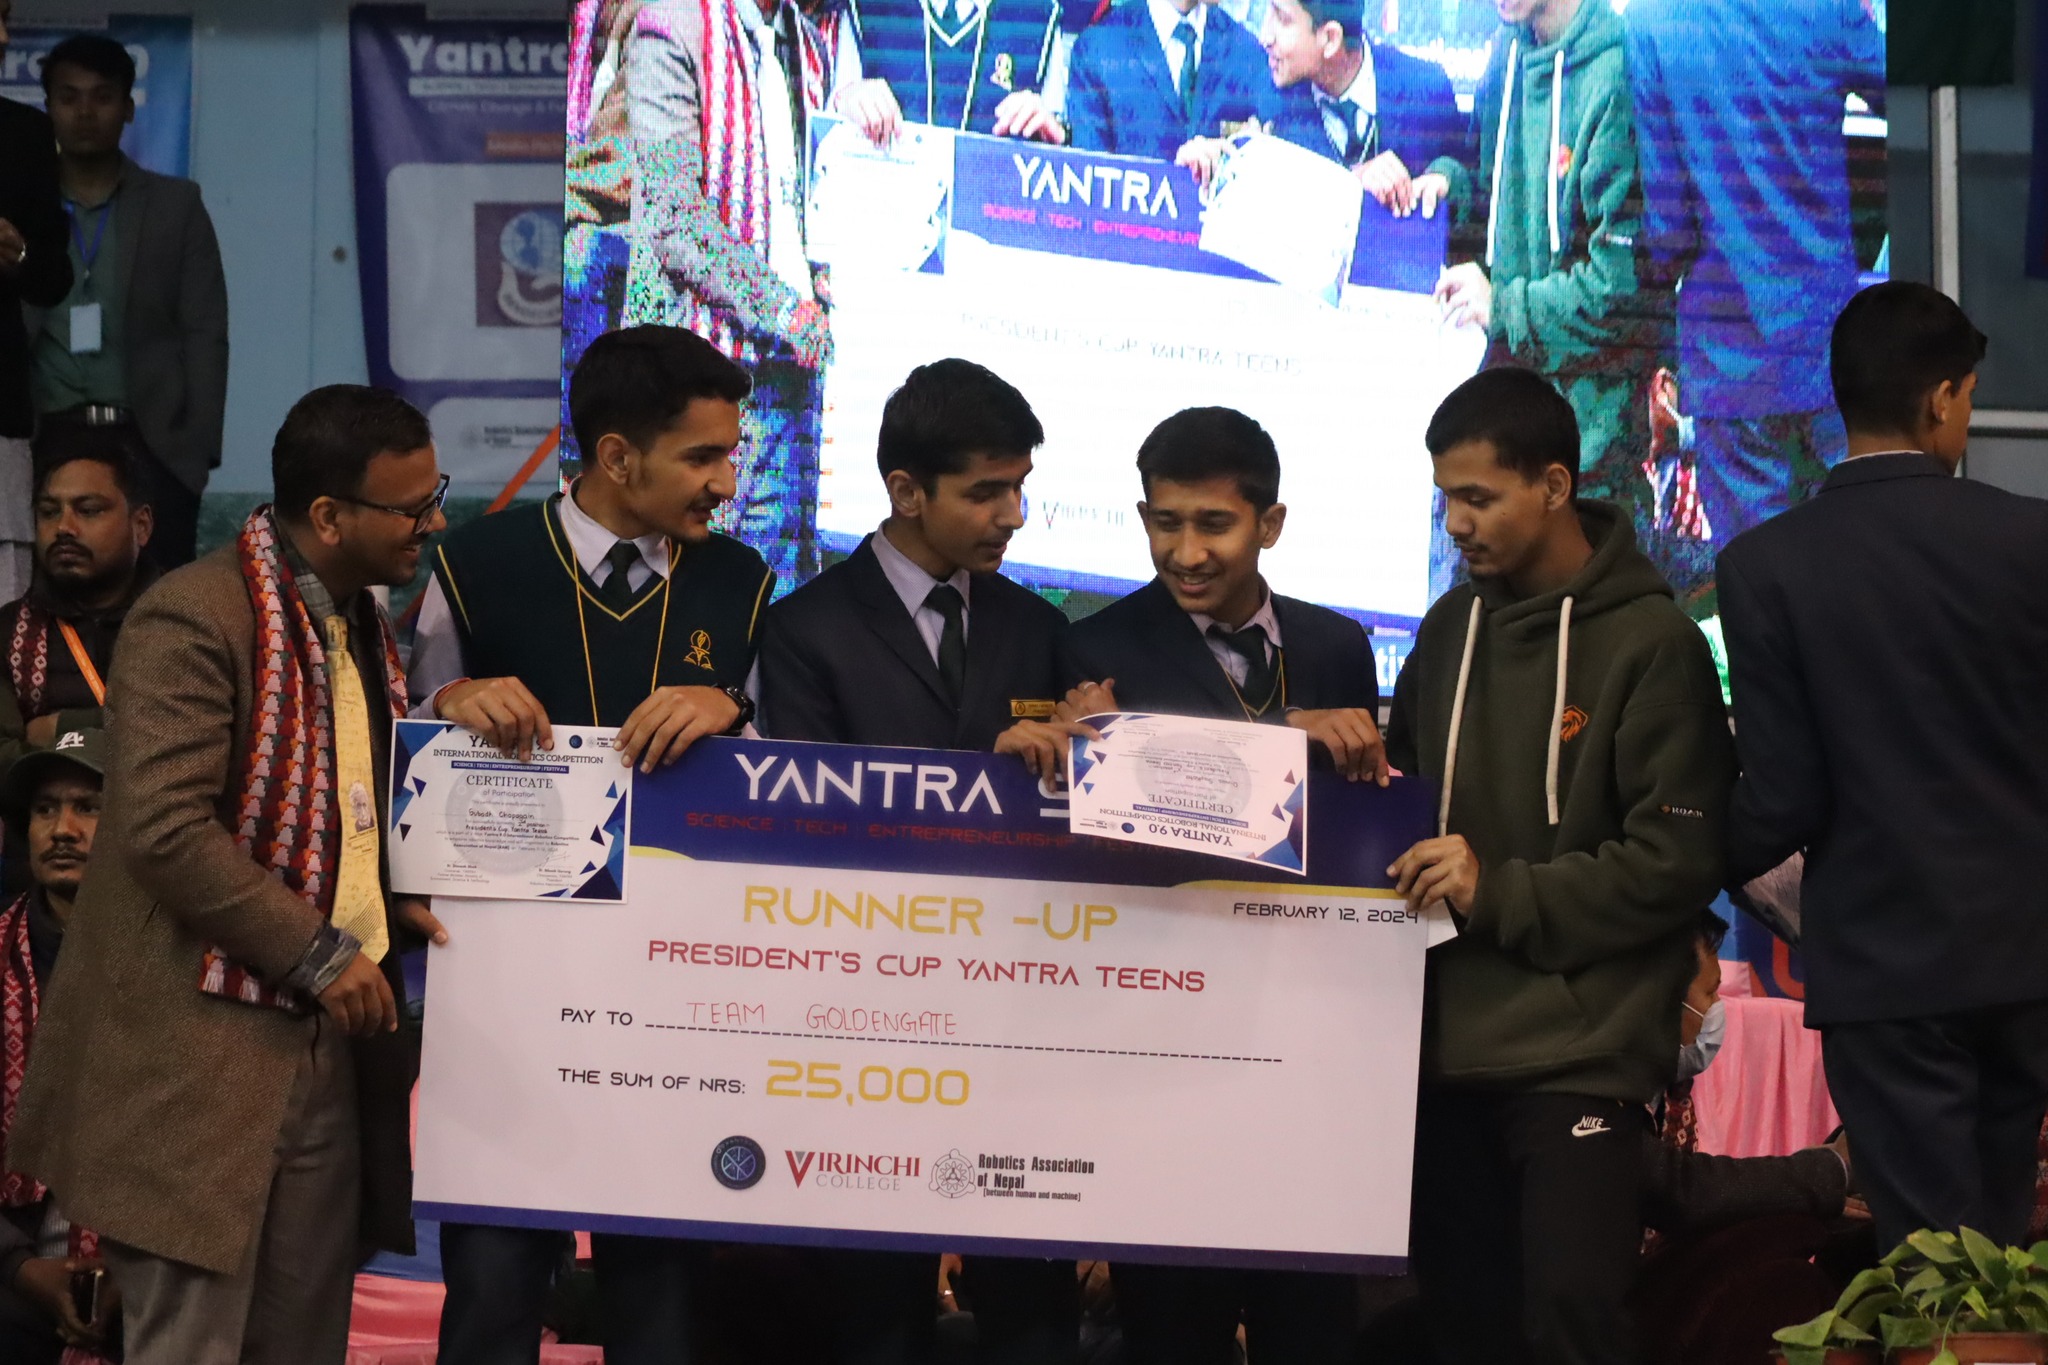 Presidents Cup Yantra Teens Runner-up - Team Goldengate